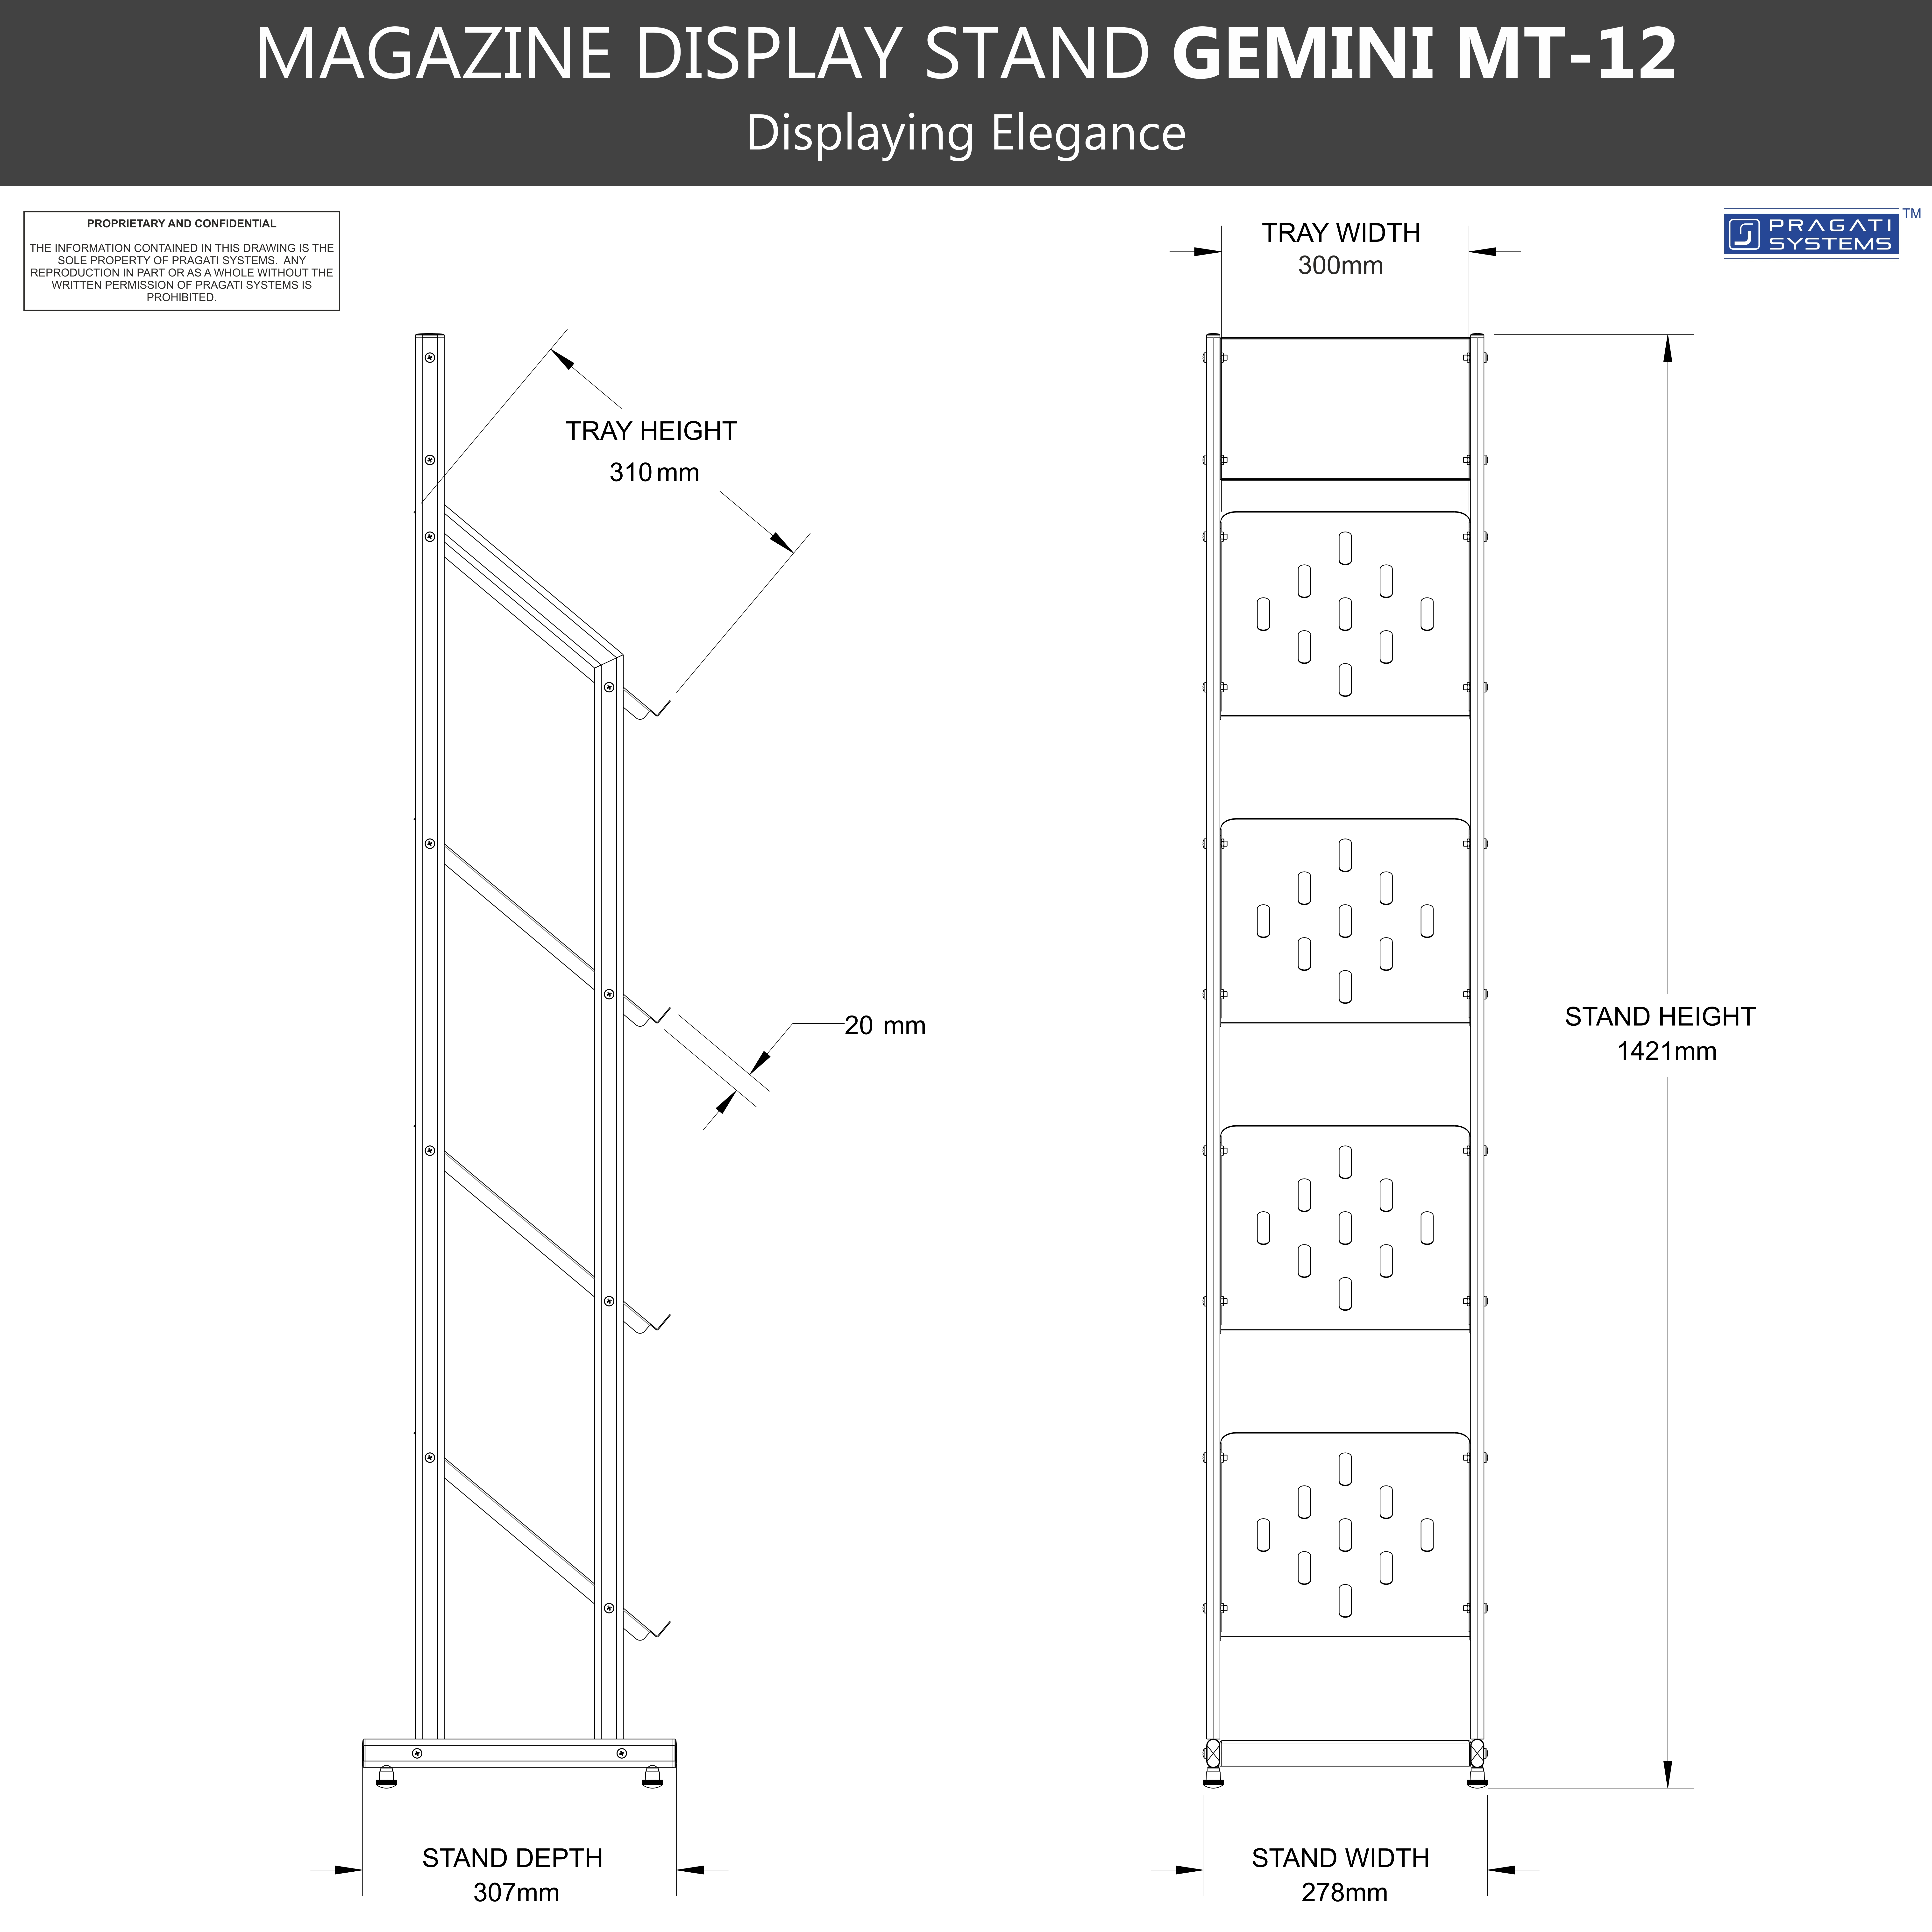 MT-12 Literature Rack & Magazine Display Stand